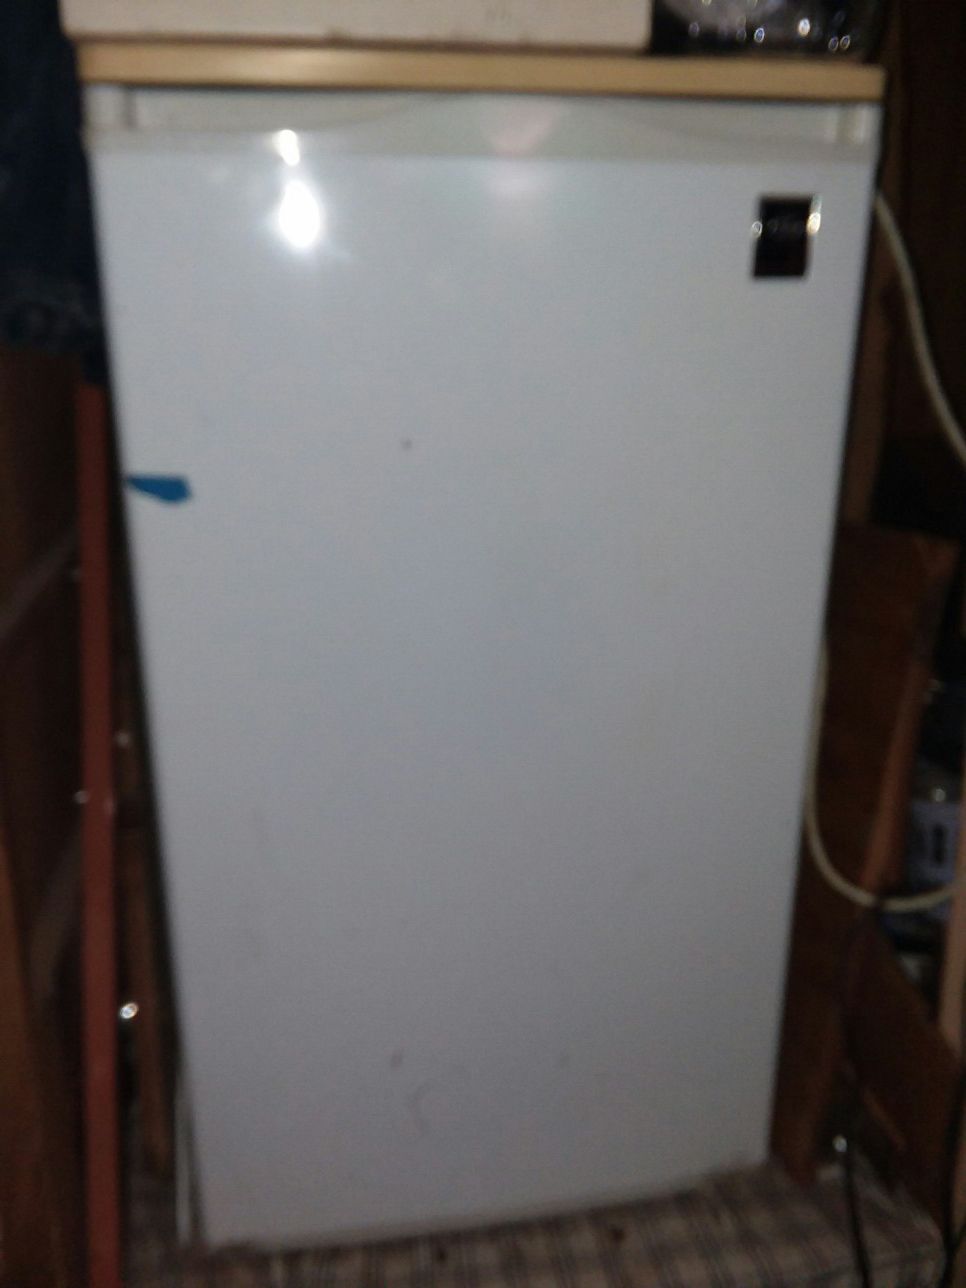 Mini refrigerator